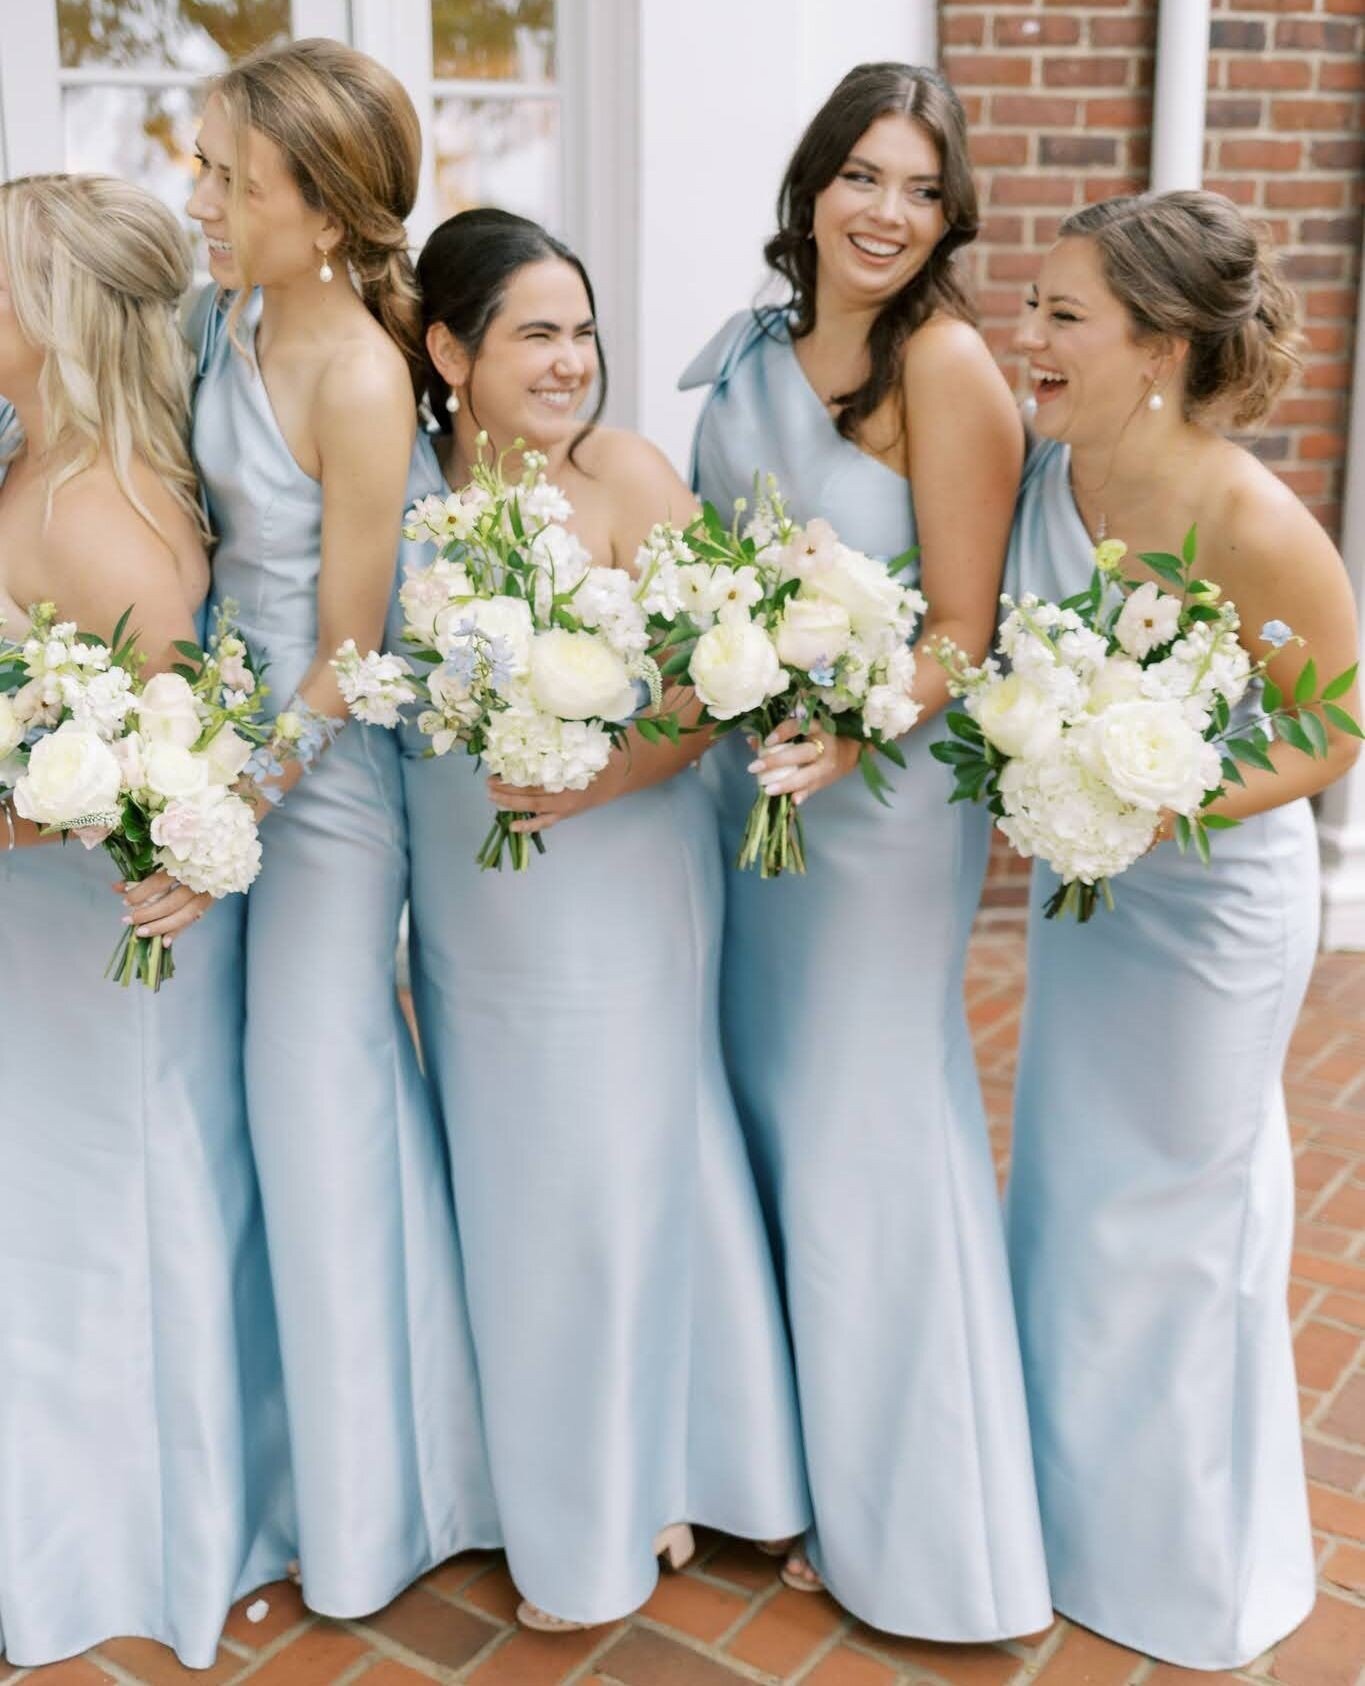 something blue ⁠💙⁠
// 📷: @ashleyeaglesonphotography⁠
. ⁠
. ⁠
. ⁠
venue: @the_ccv⁠
florals: @petalsandtwigsrva⁠
#luxurywedding #luxuryweddingplanner #weddingdesigner #weddingplanner #richmondwedding #charlottesvillewedding #virginiawedding #virginia